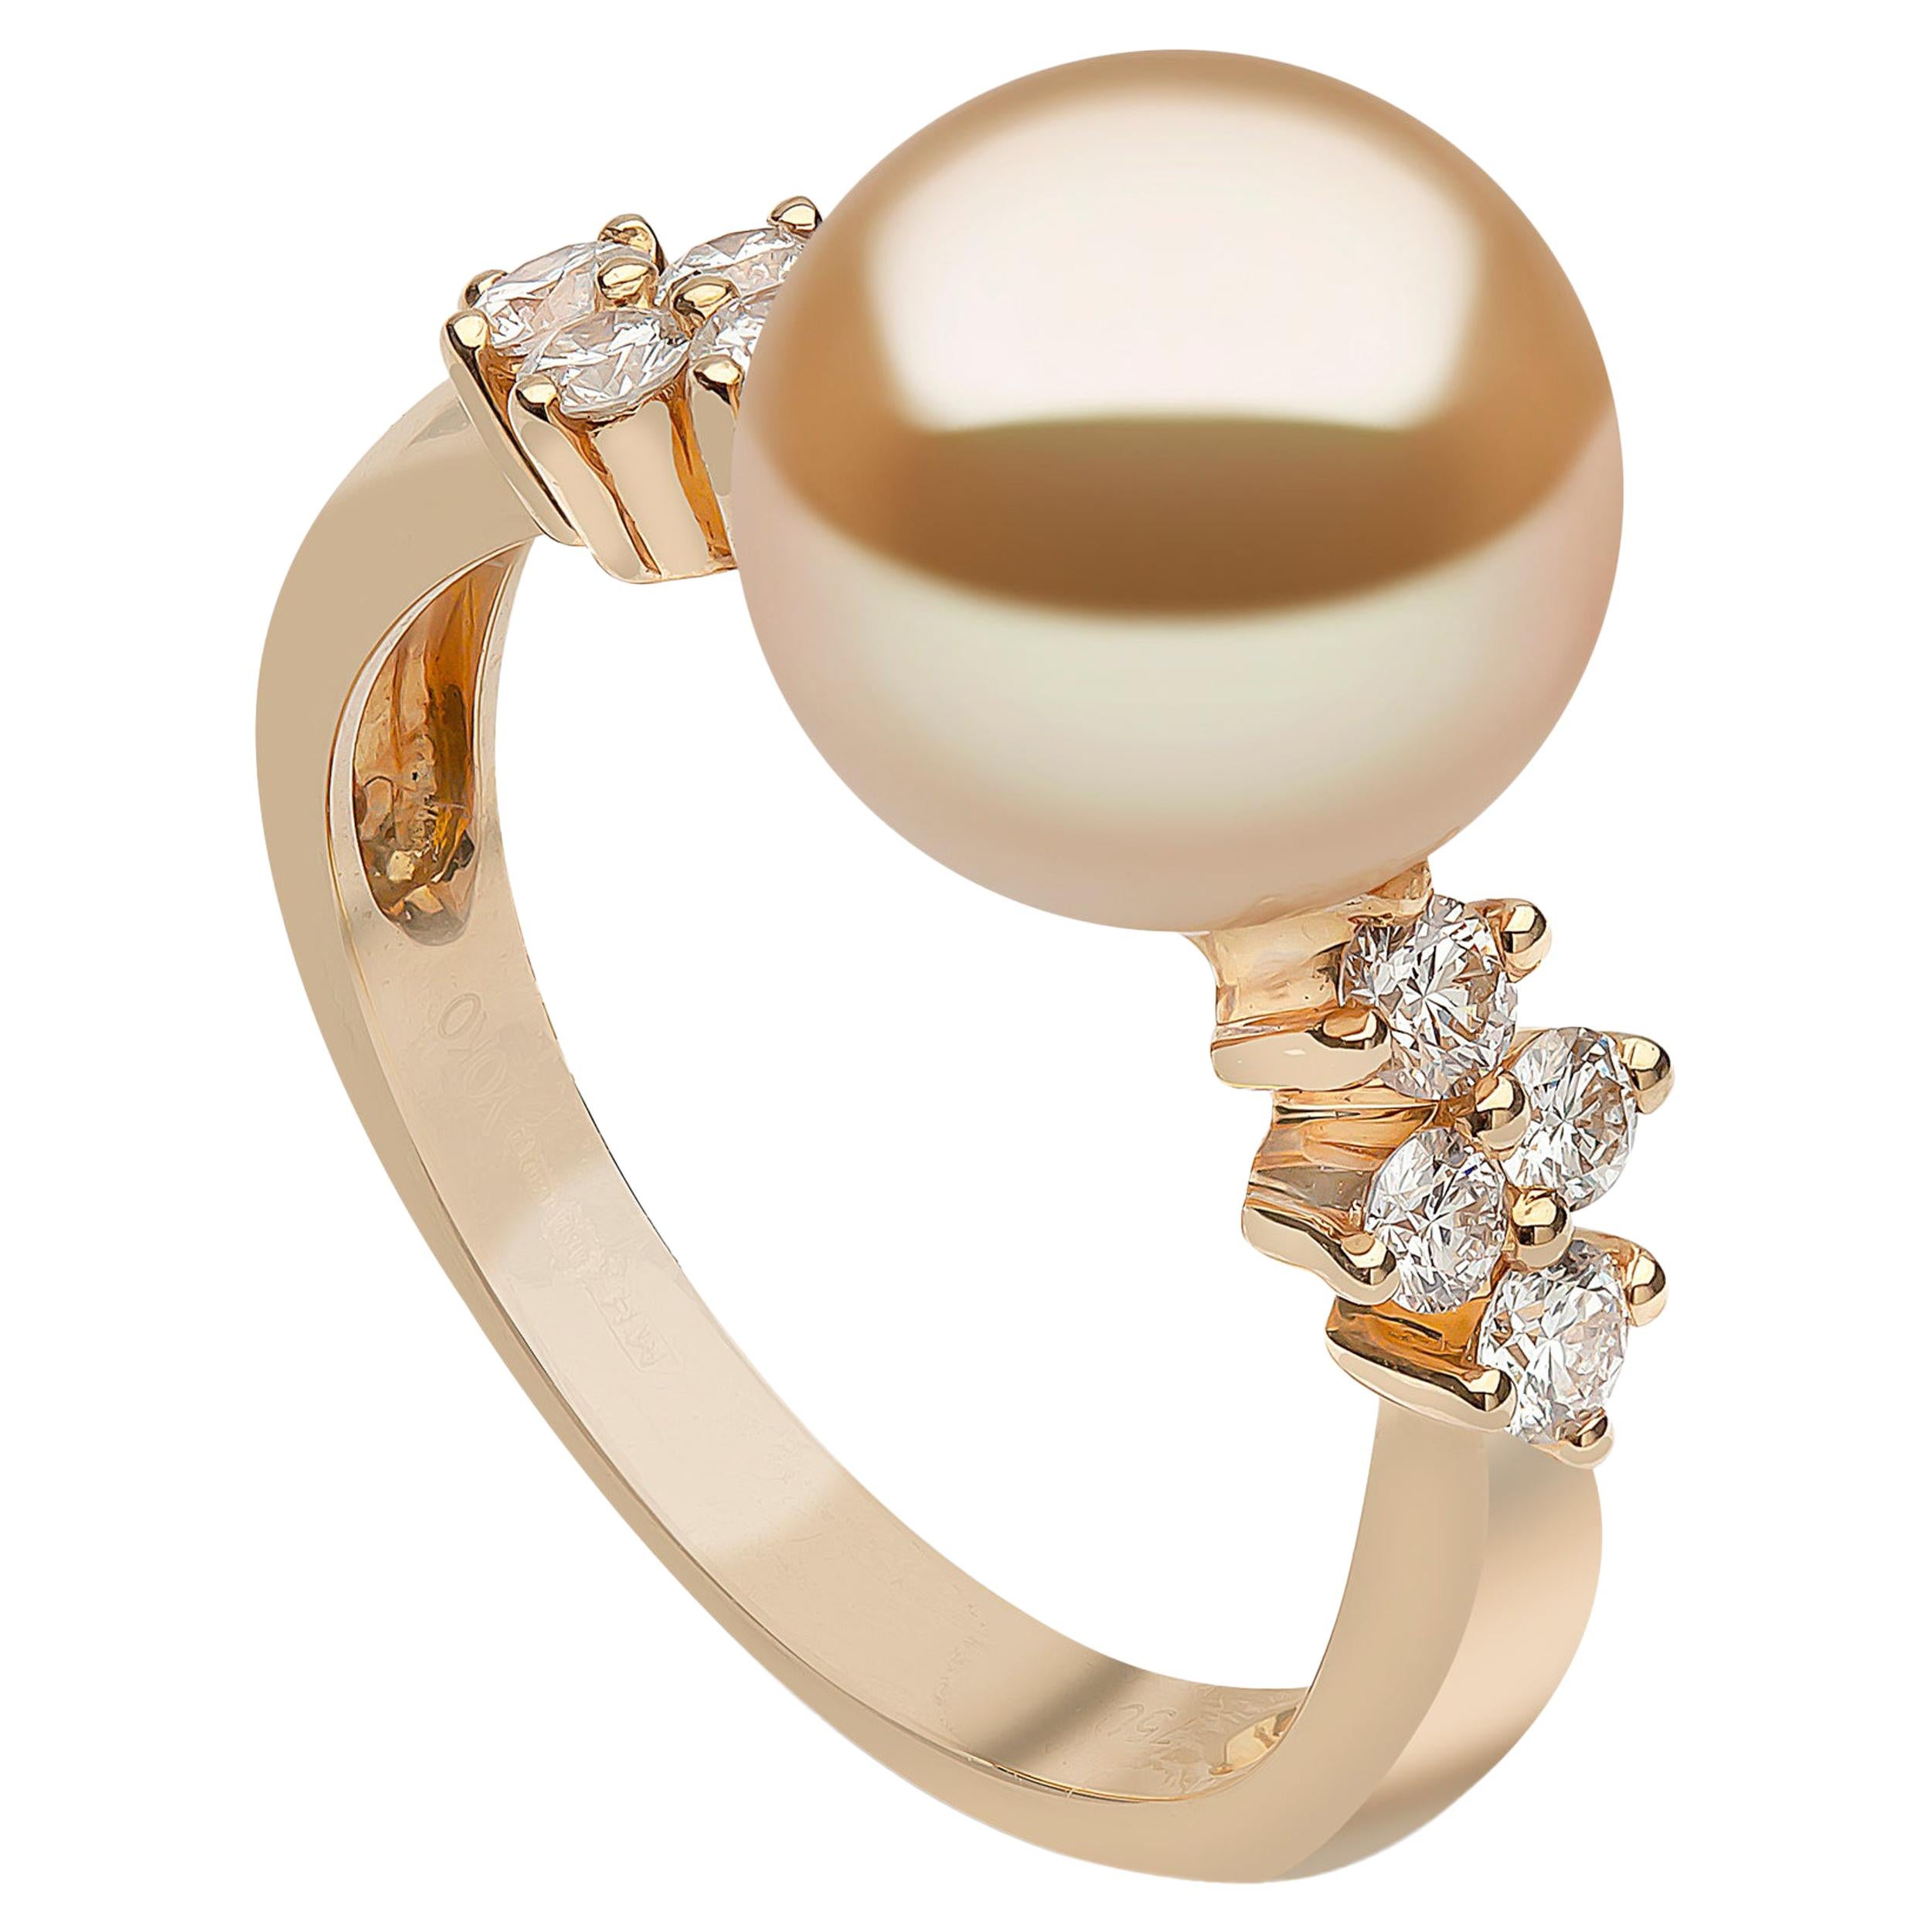 Yoko London Golden South Sea Pearl and Diamond Ring in 18 Karat Yellow Gold